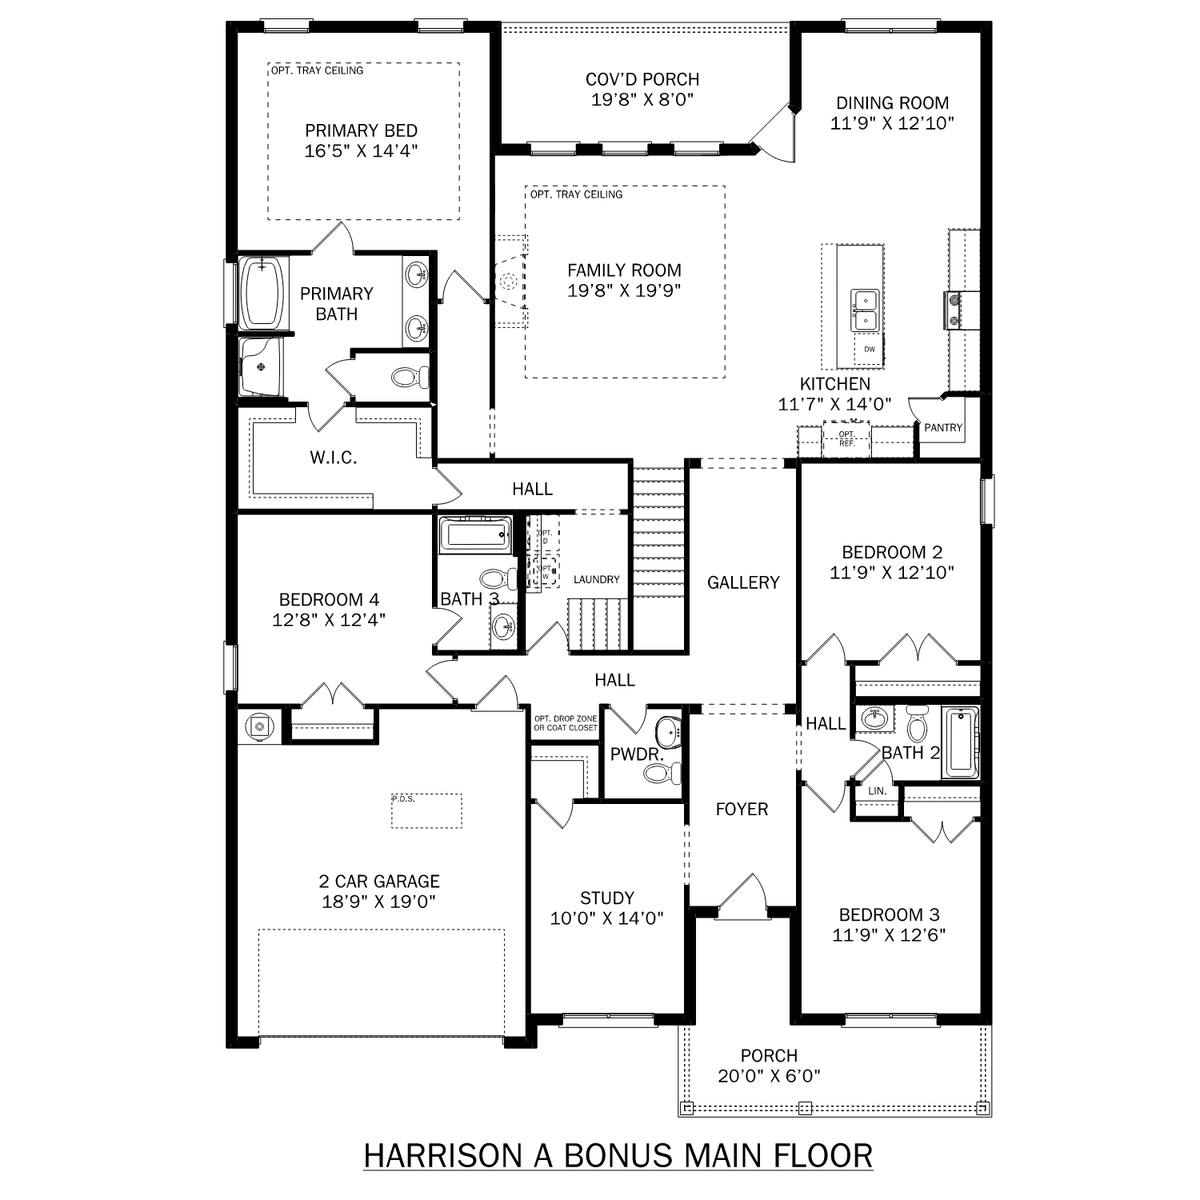 1 - The Harrison with Bonus buildable floor plan layout in Davidson Homes' North Ridge community.